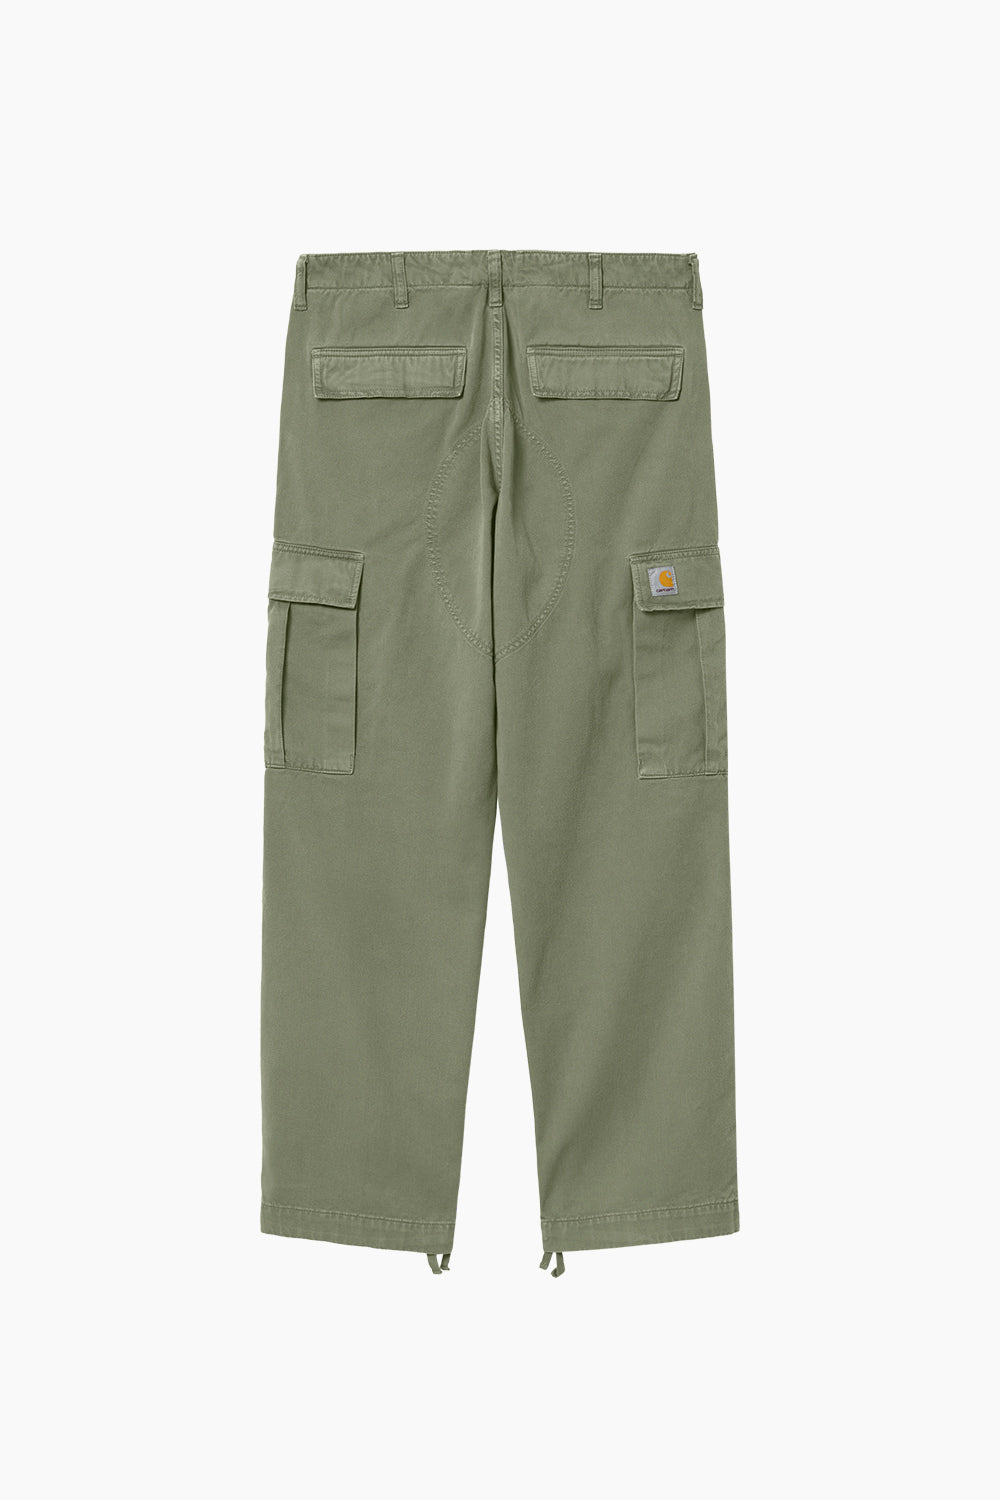 Carhartt WIP Garment Dyed Cargo Pant (Green)